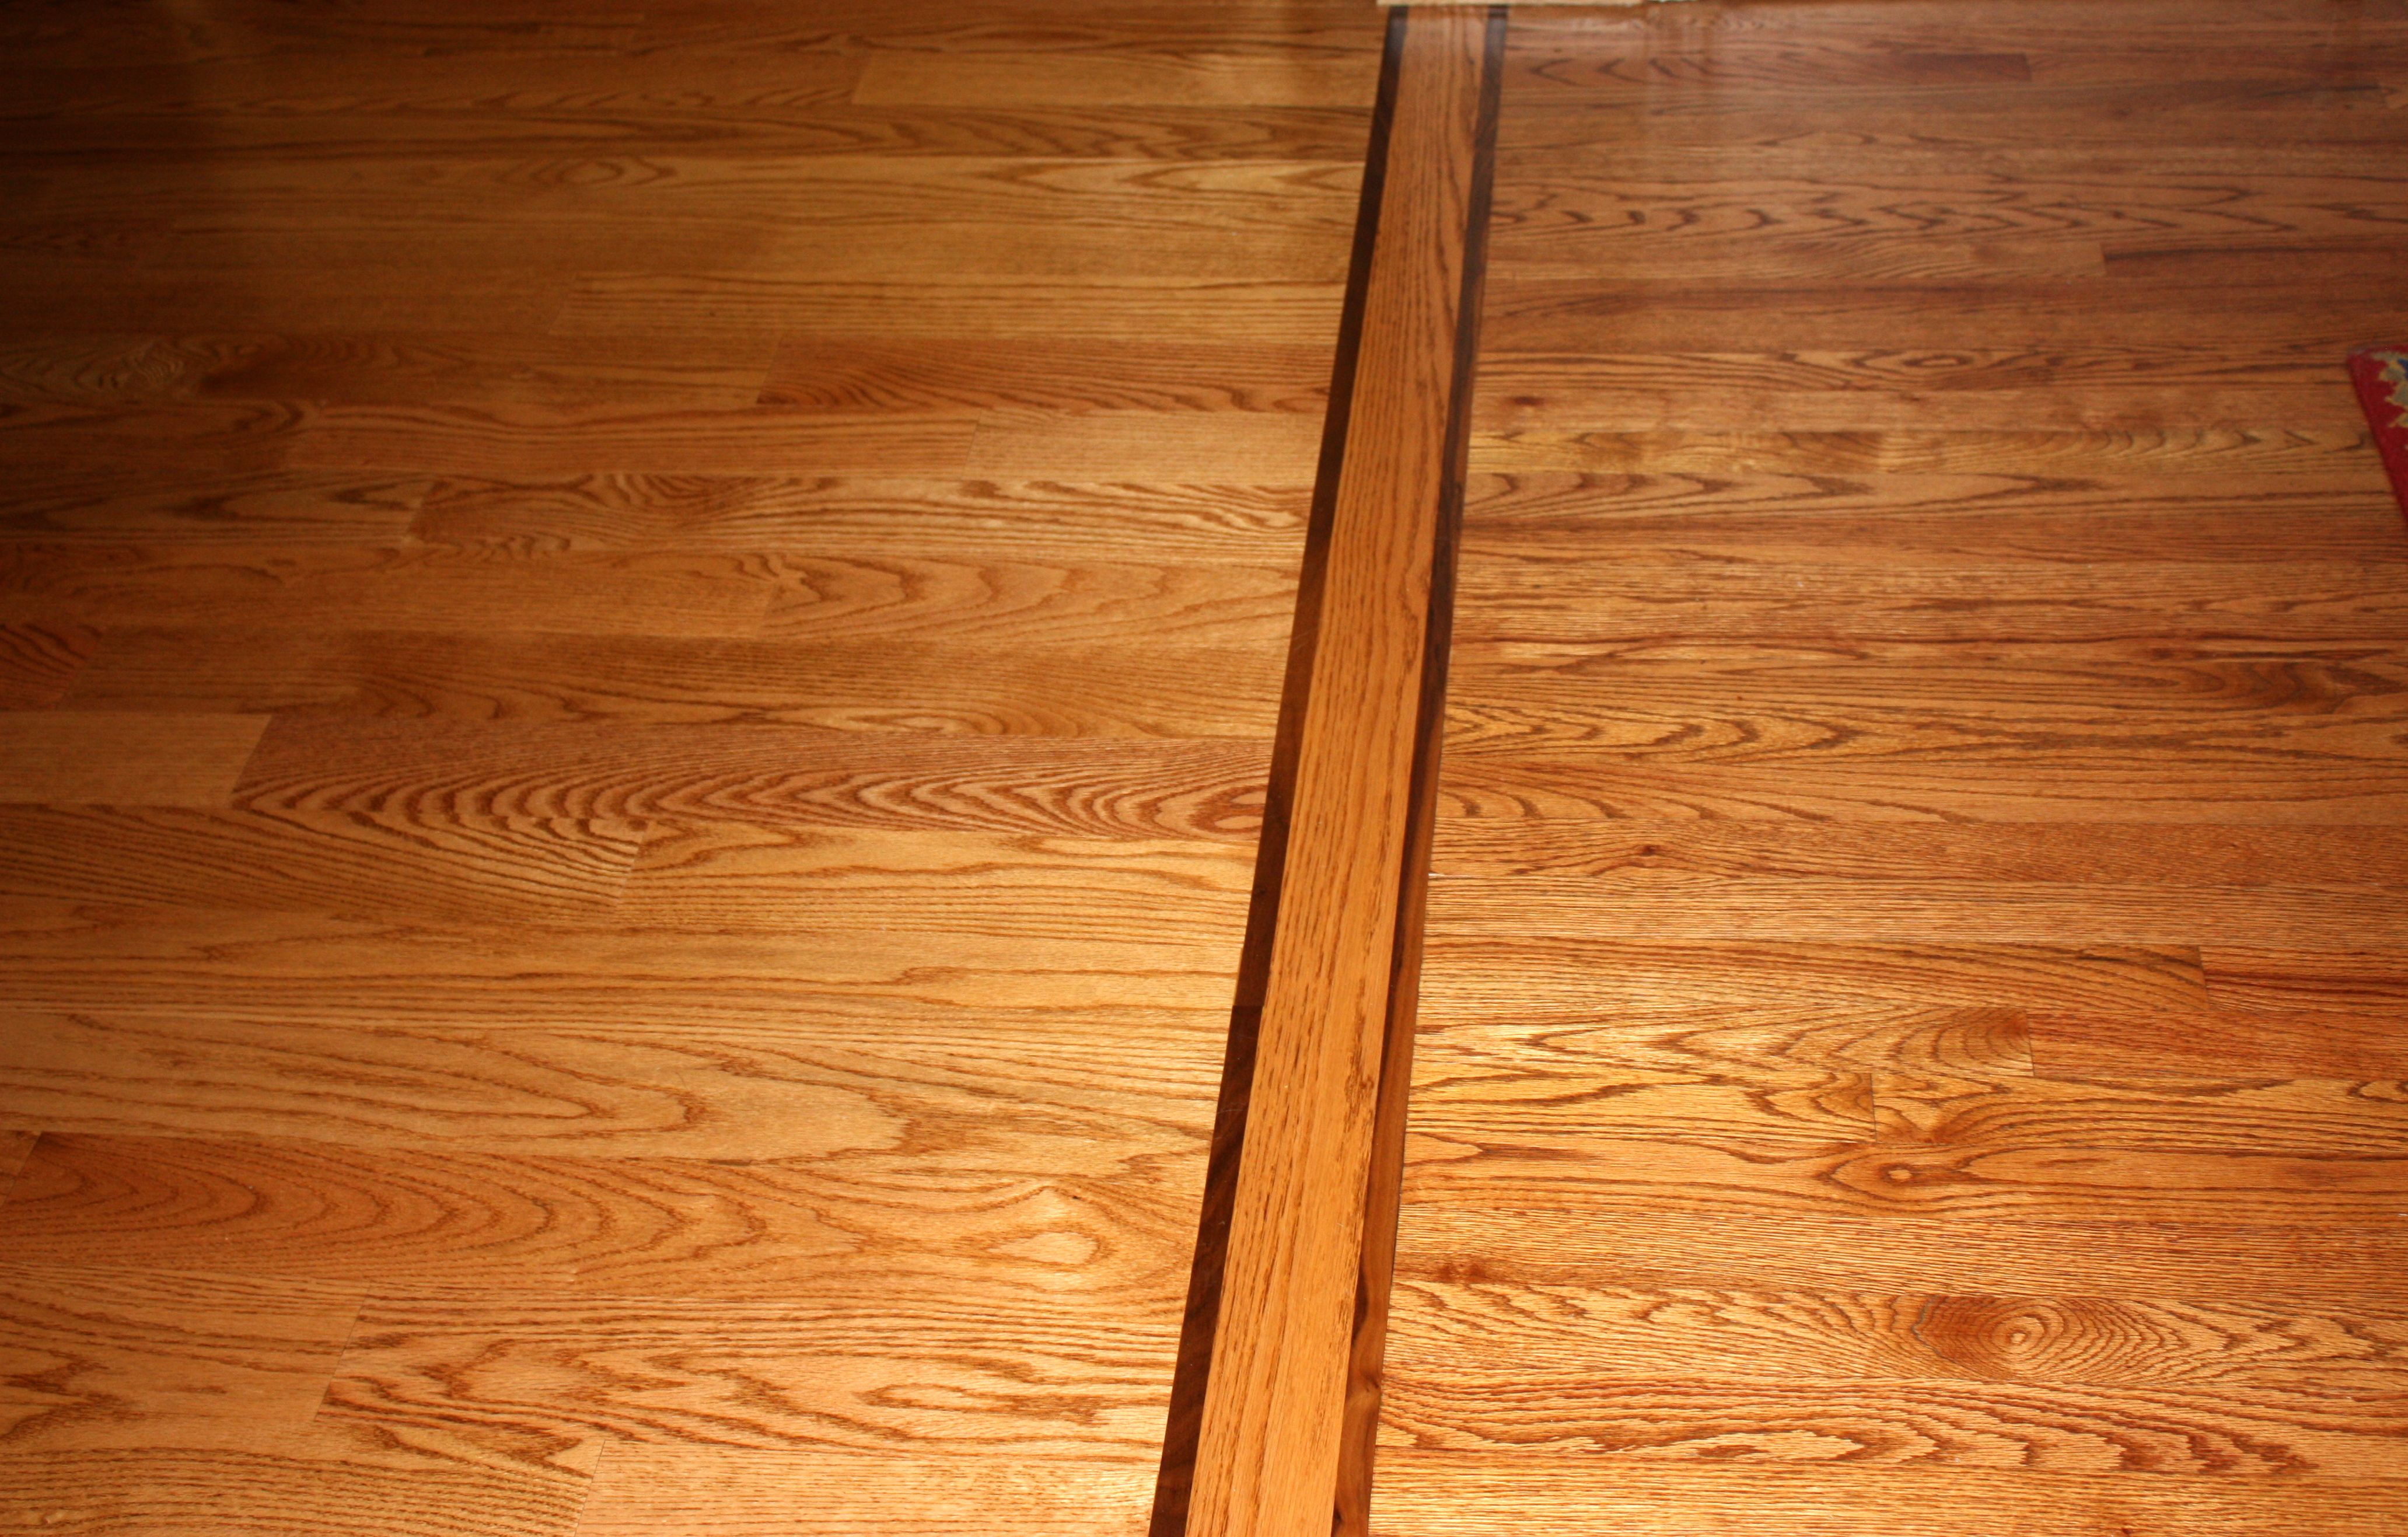 Matching An Existing Hardwood Floor, How To Match Laminate Flooring Hardwood